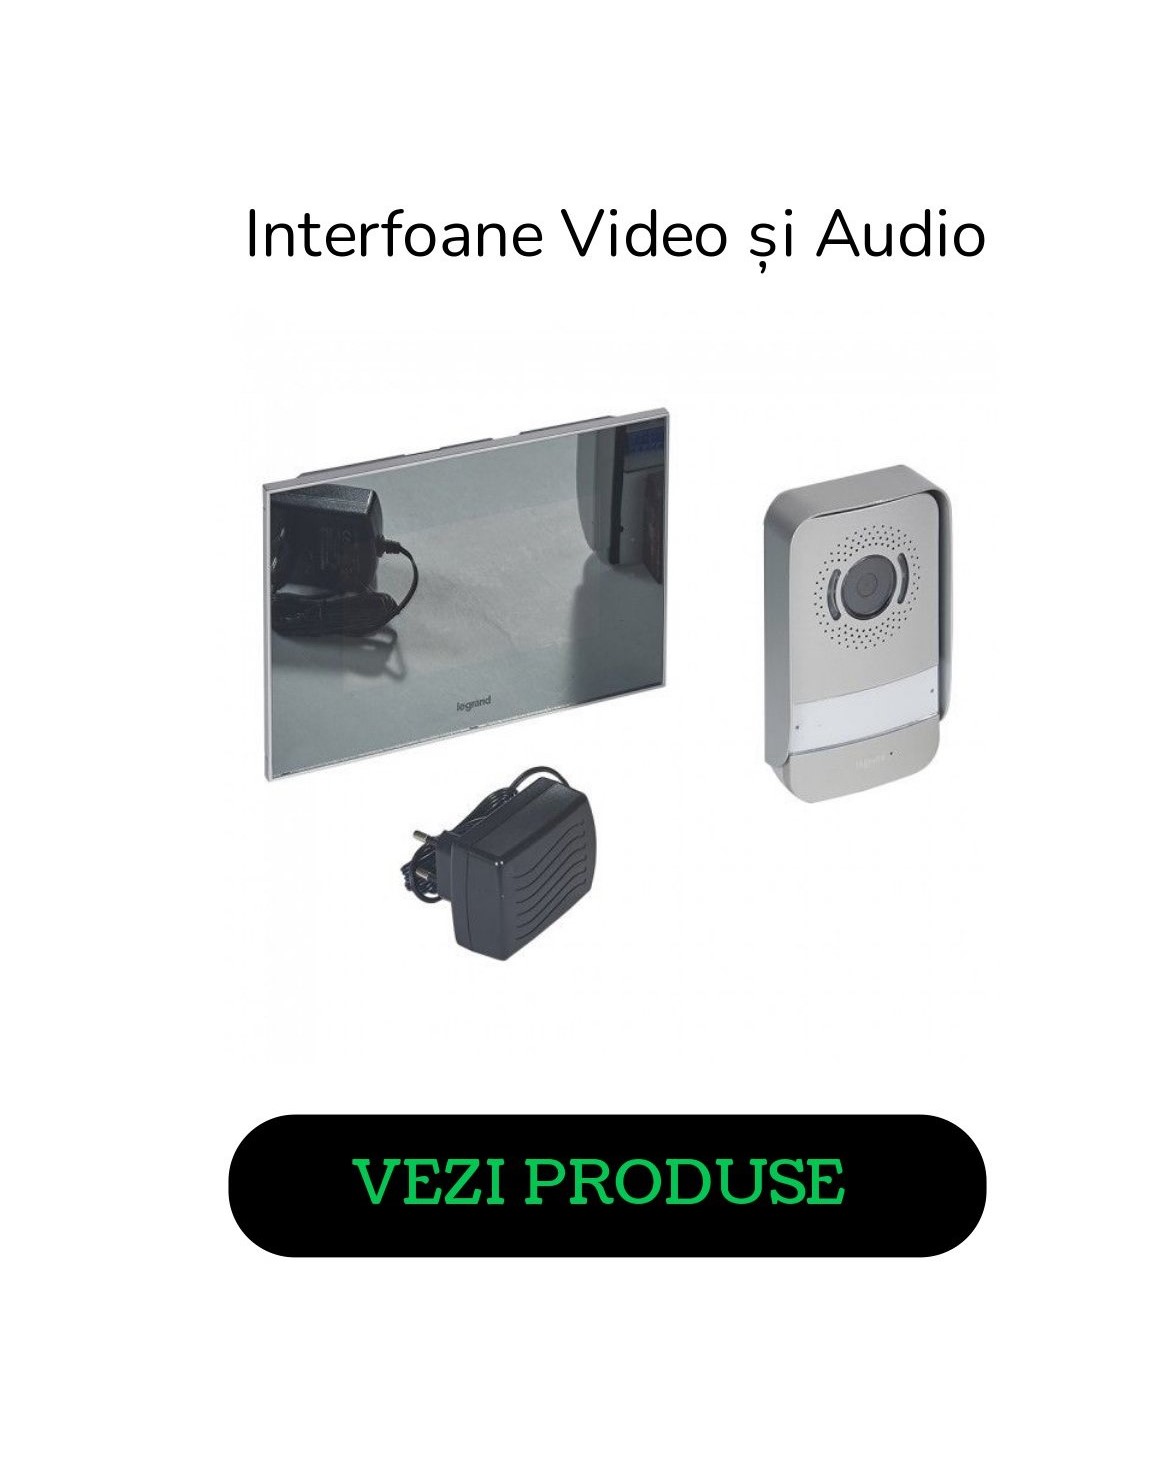 Interfoane video si audio